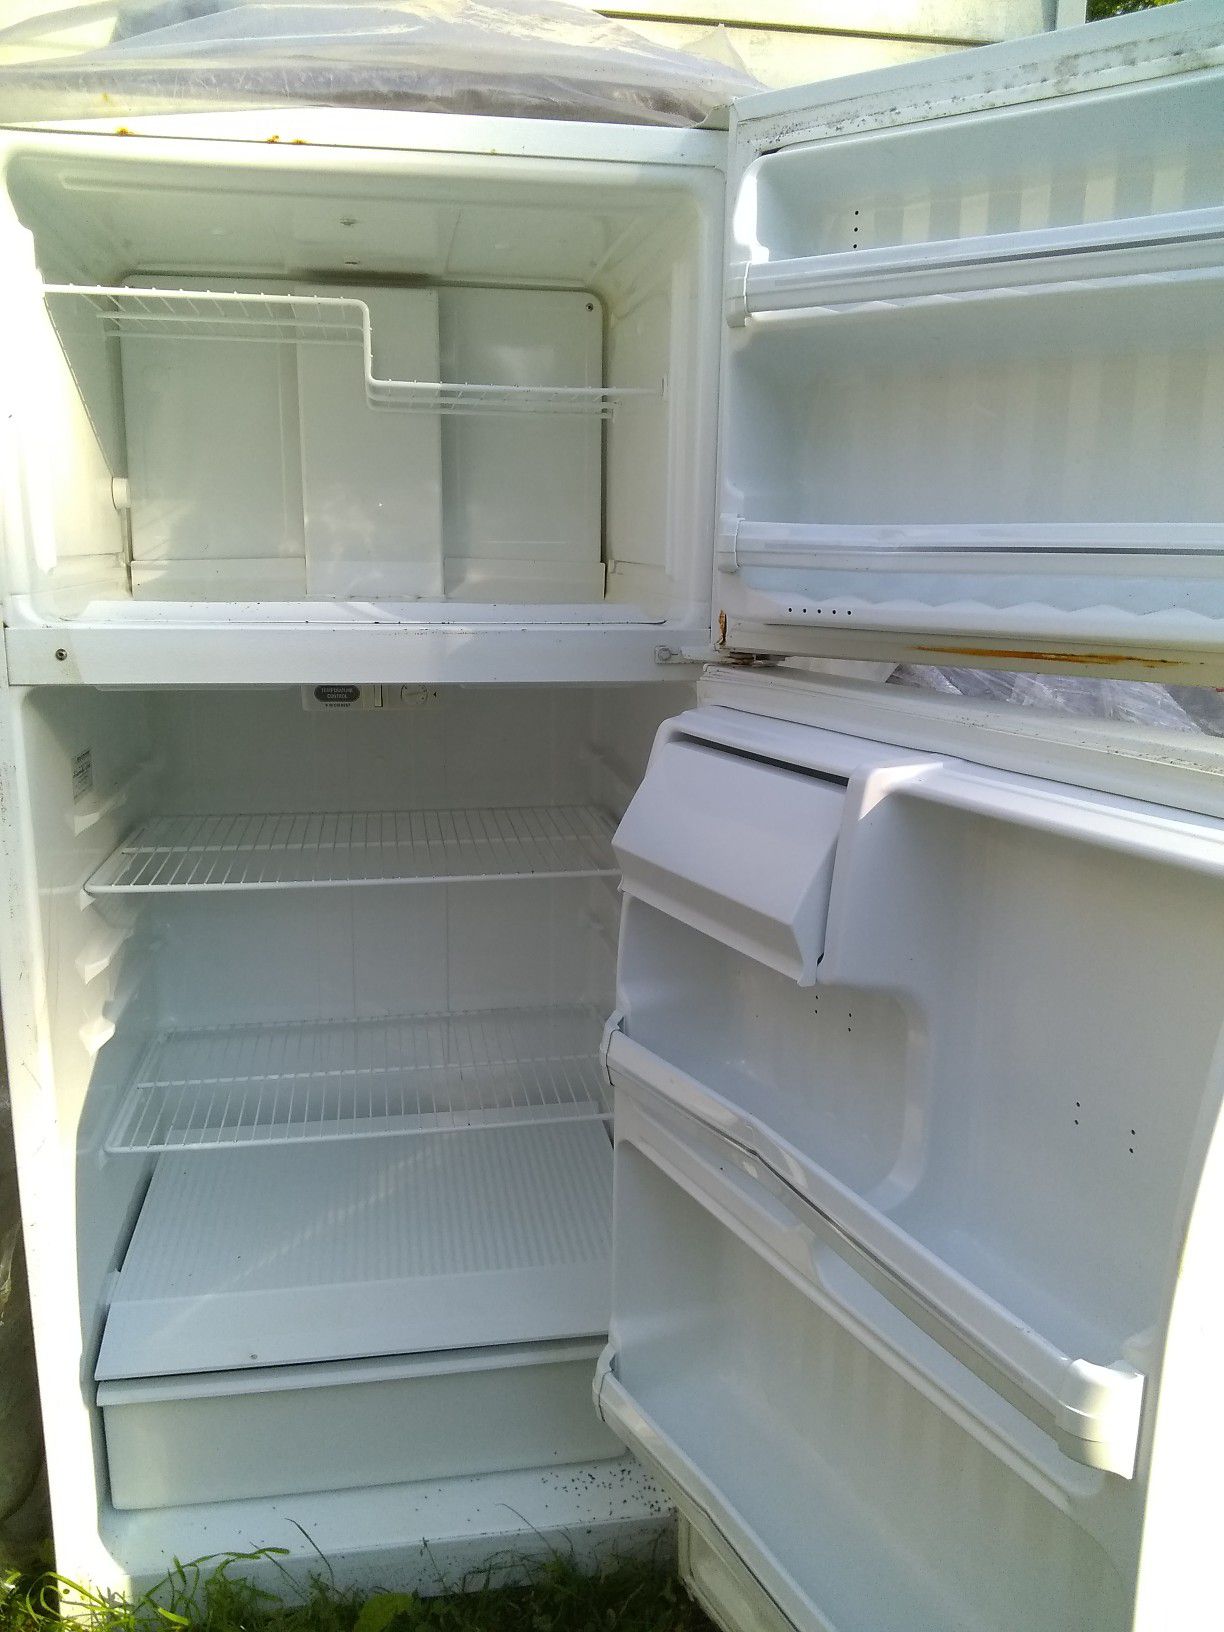 Ge. refrigator / freezer. mid size 14.6 cu ft